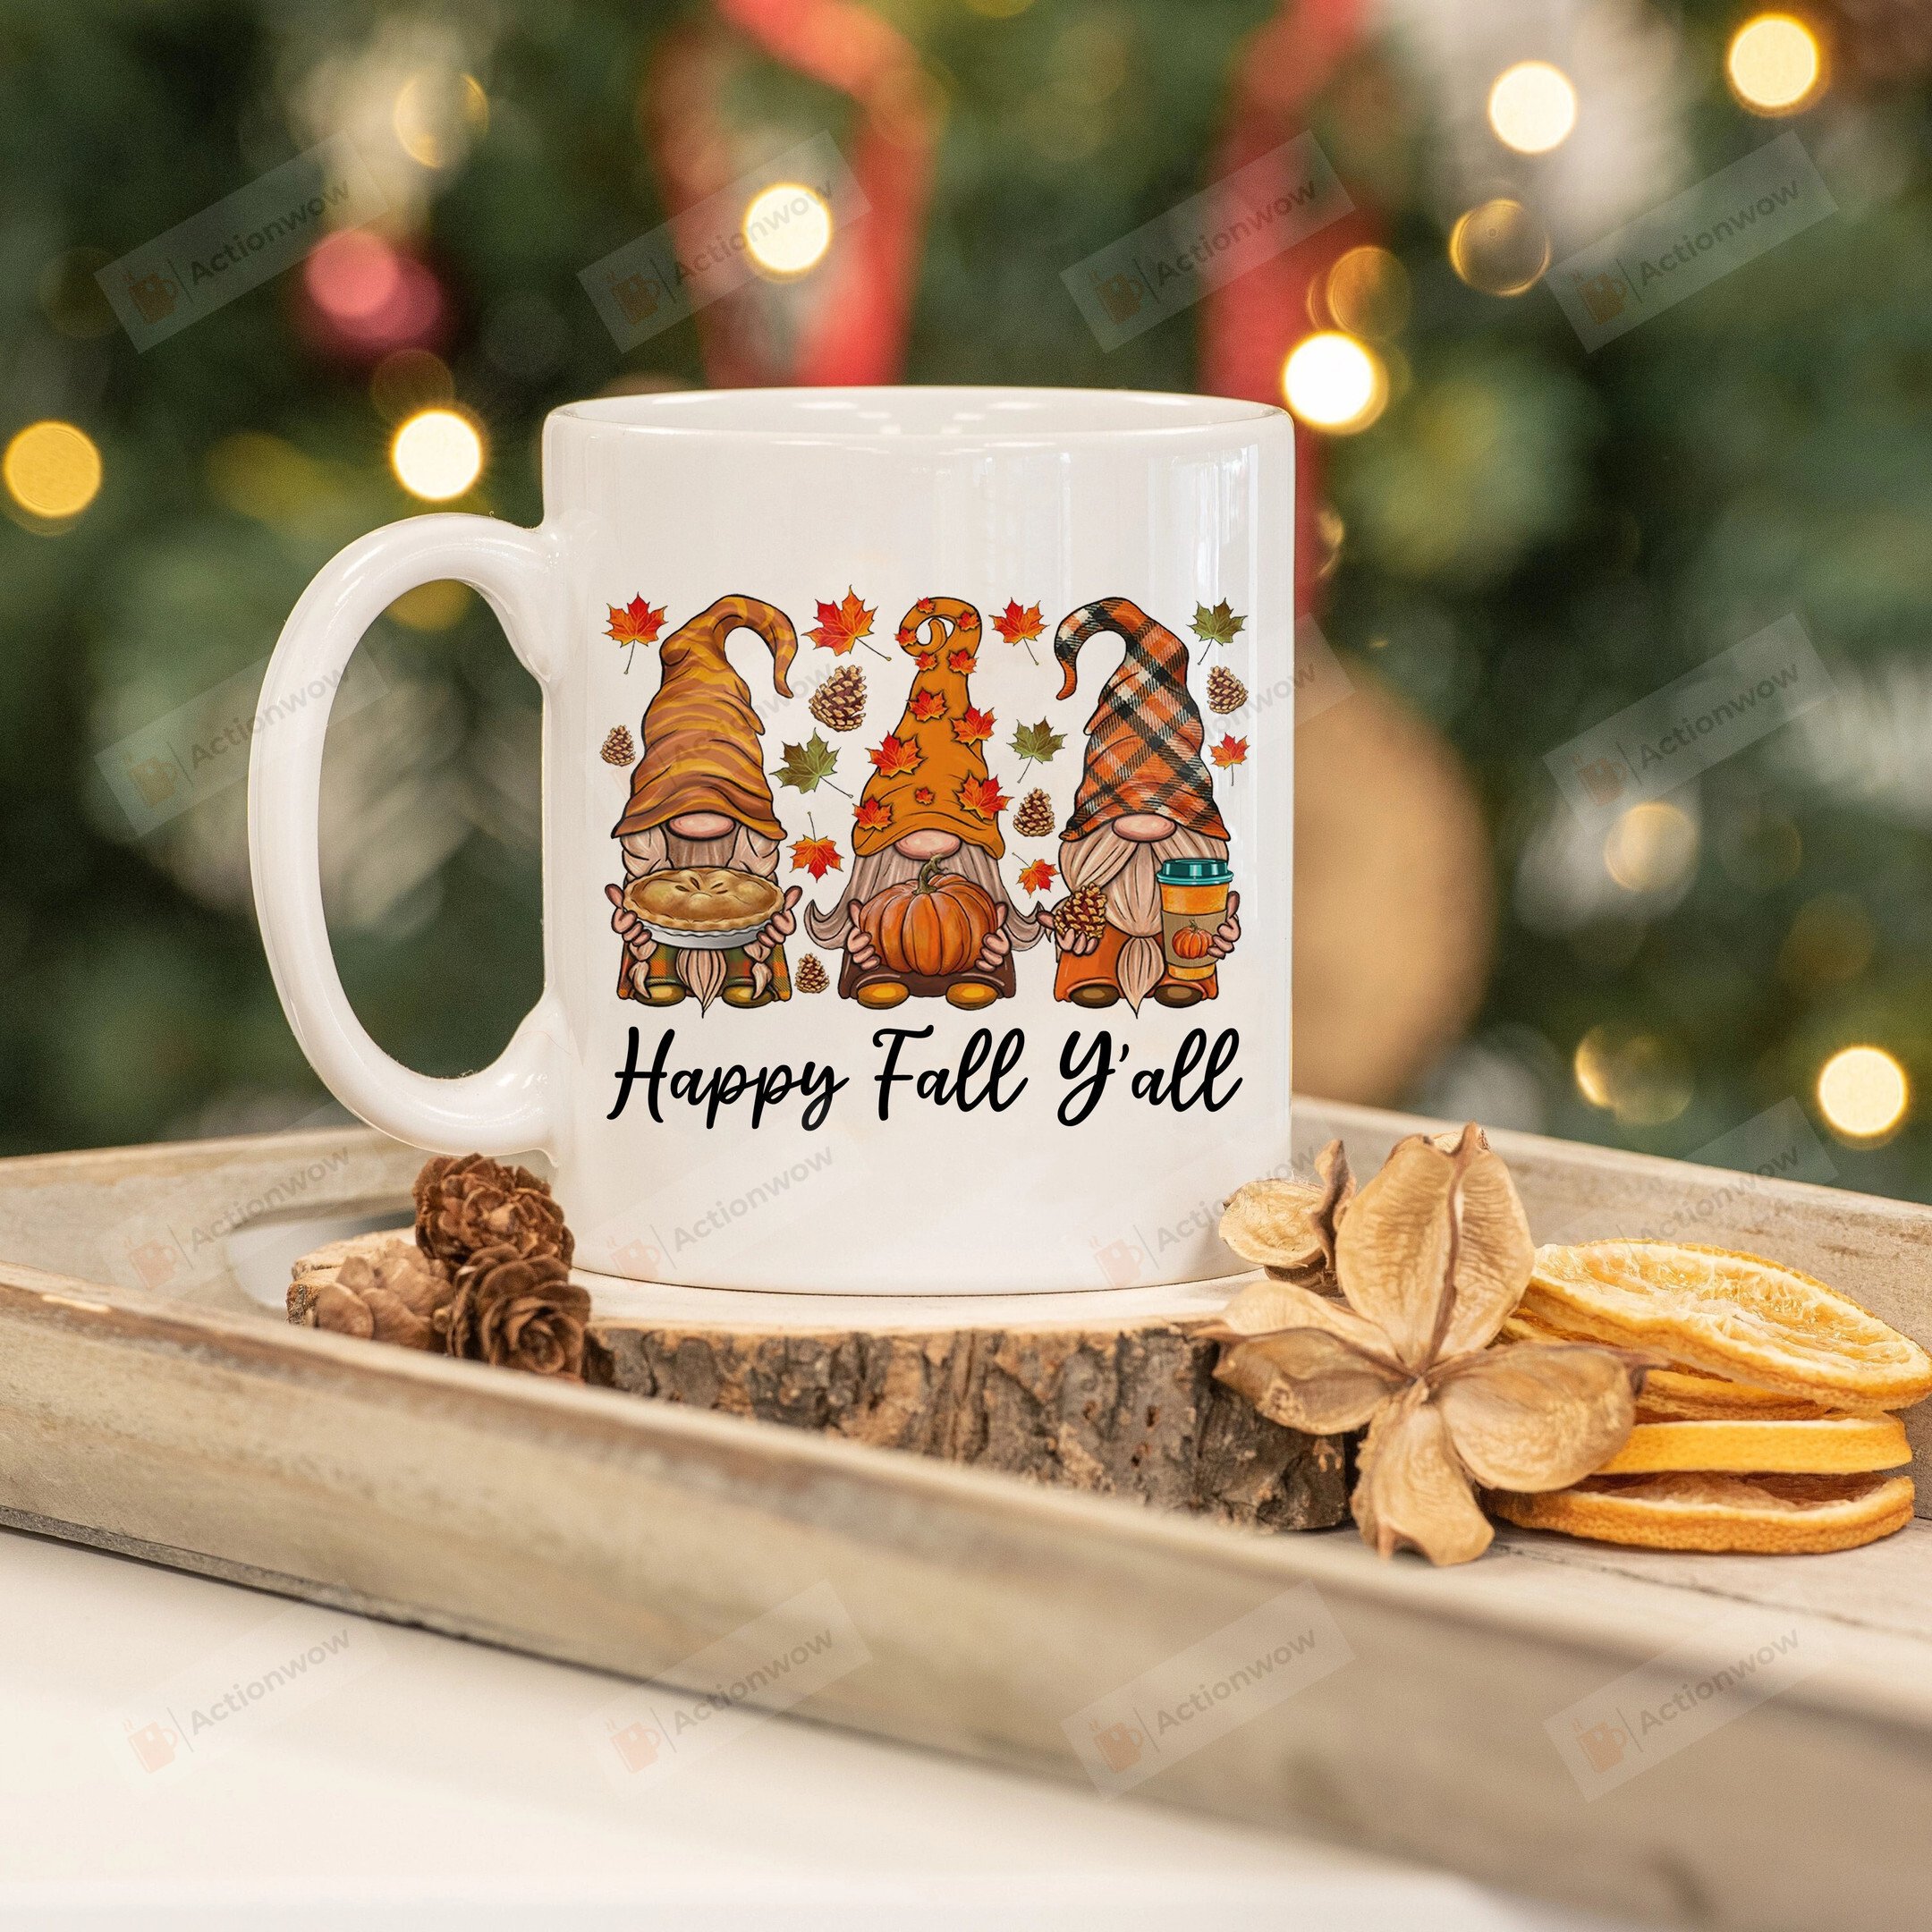 Happy Fall Y'all Thanksgiving Gnome Mug, Its Fall Yall Mug Fall Things For Women, Gromes Thanksgiving Sweaters Mug Gifts For Women Men